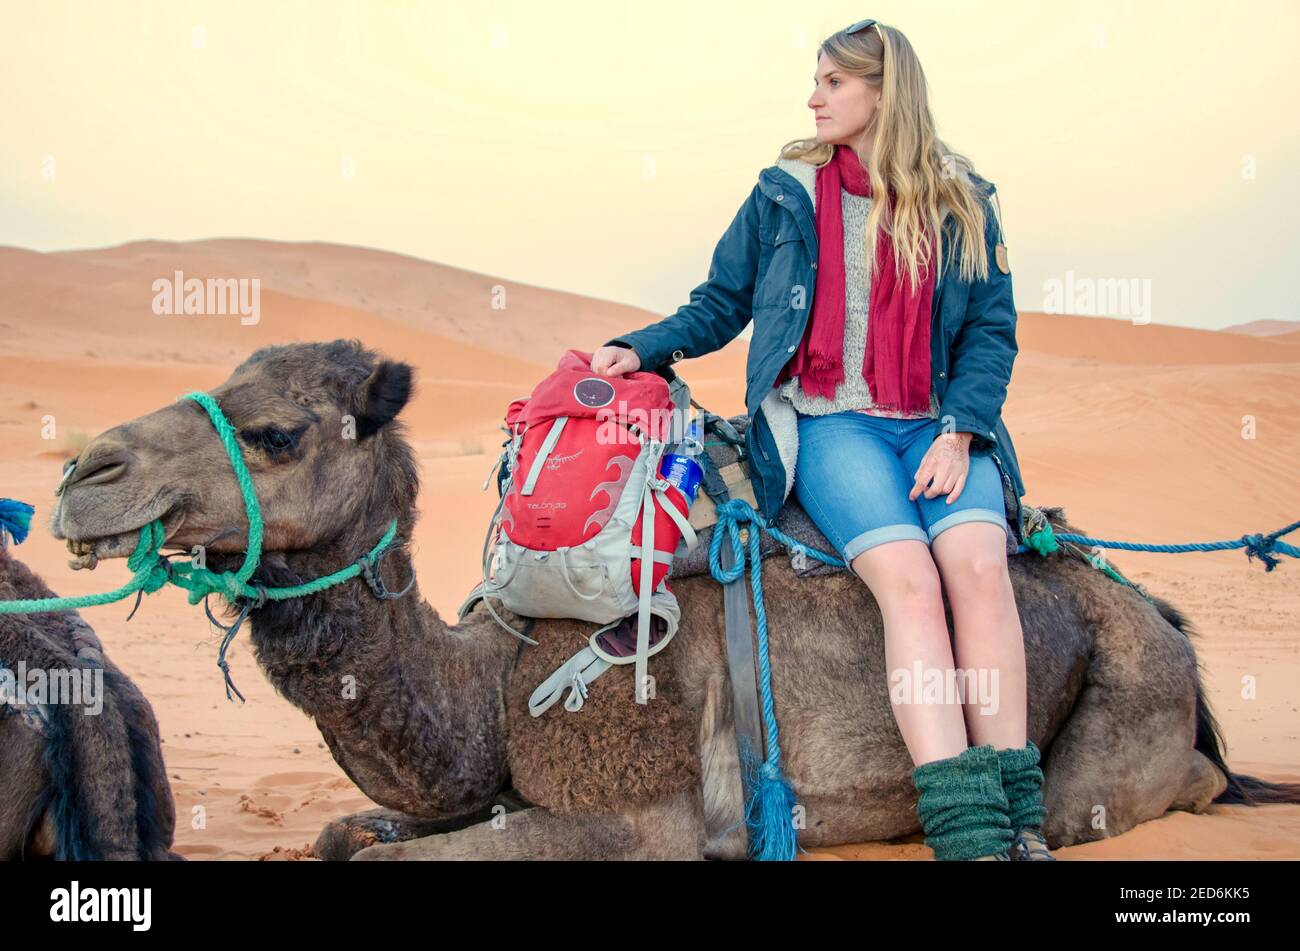 Blonde tourist girl riding a camel through the Sahara desert Stock Photo